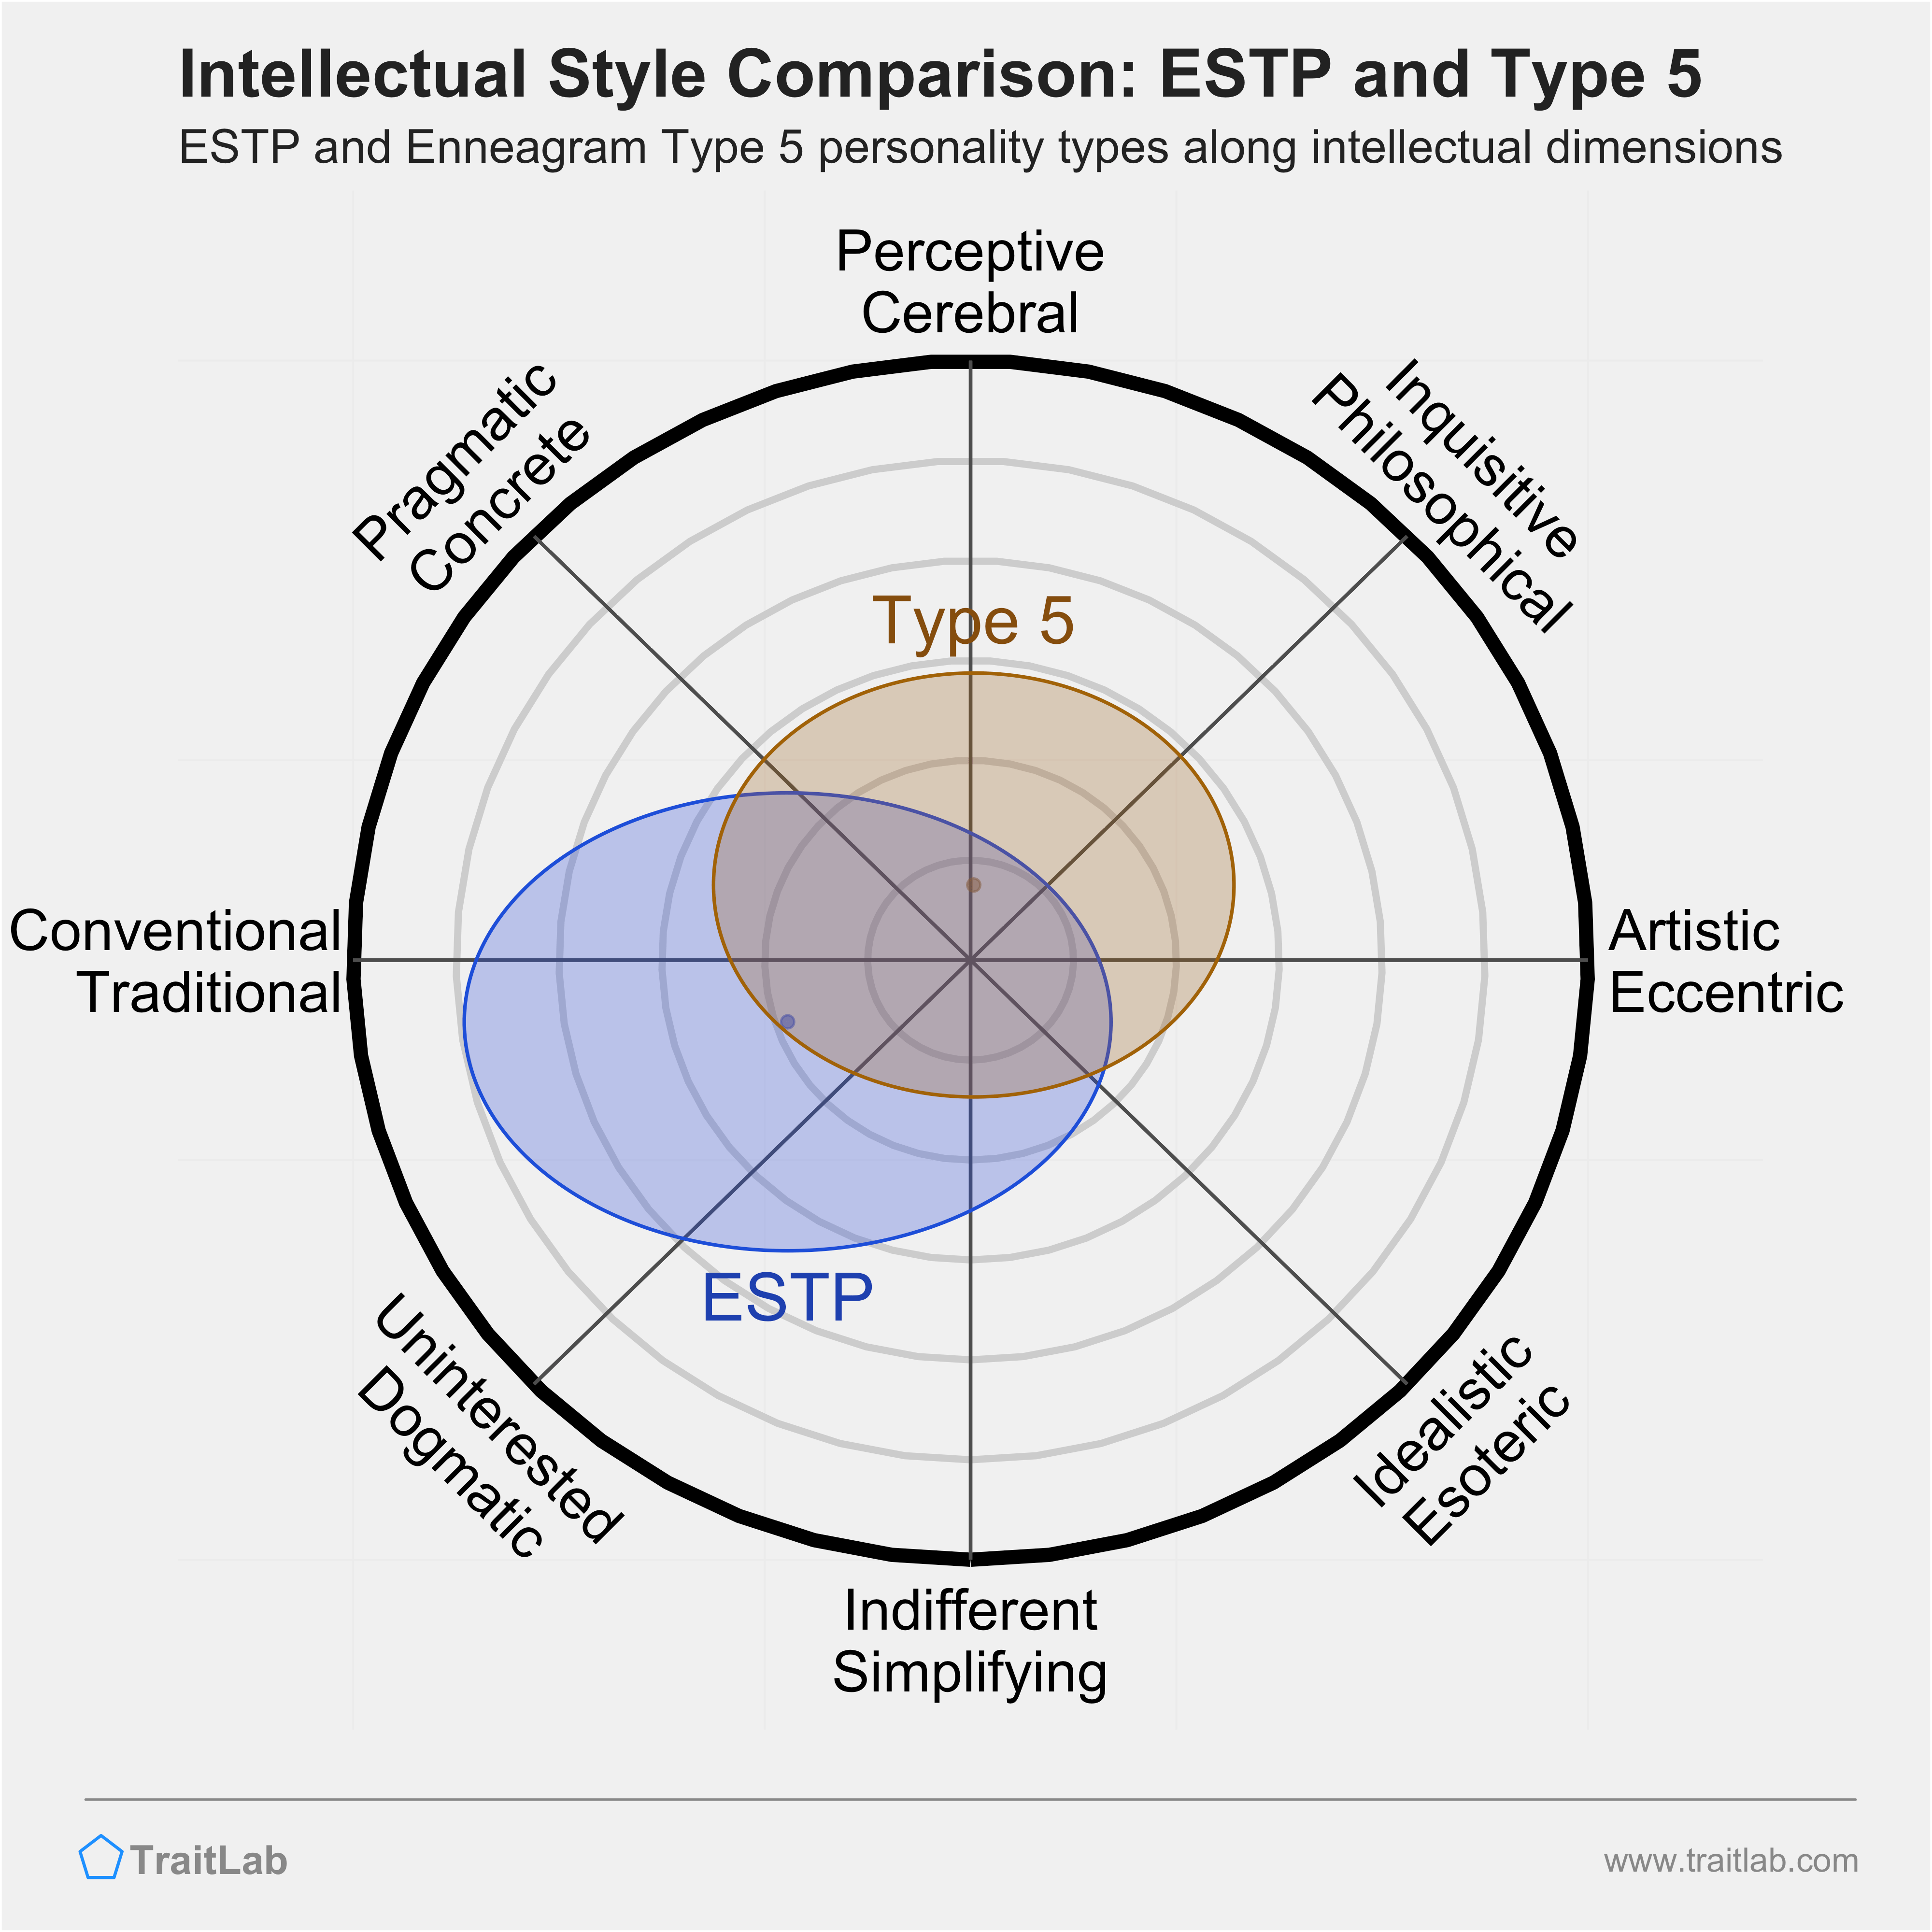 ESTP and Type 5 comparison across intellectual dimensions